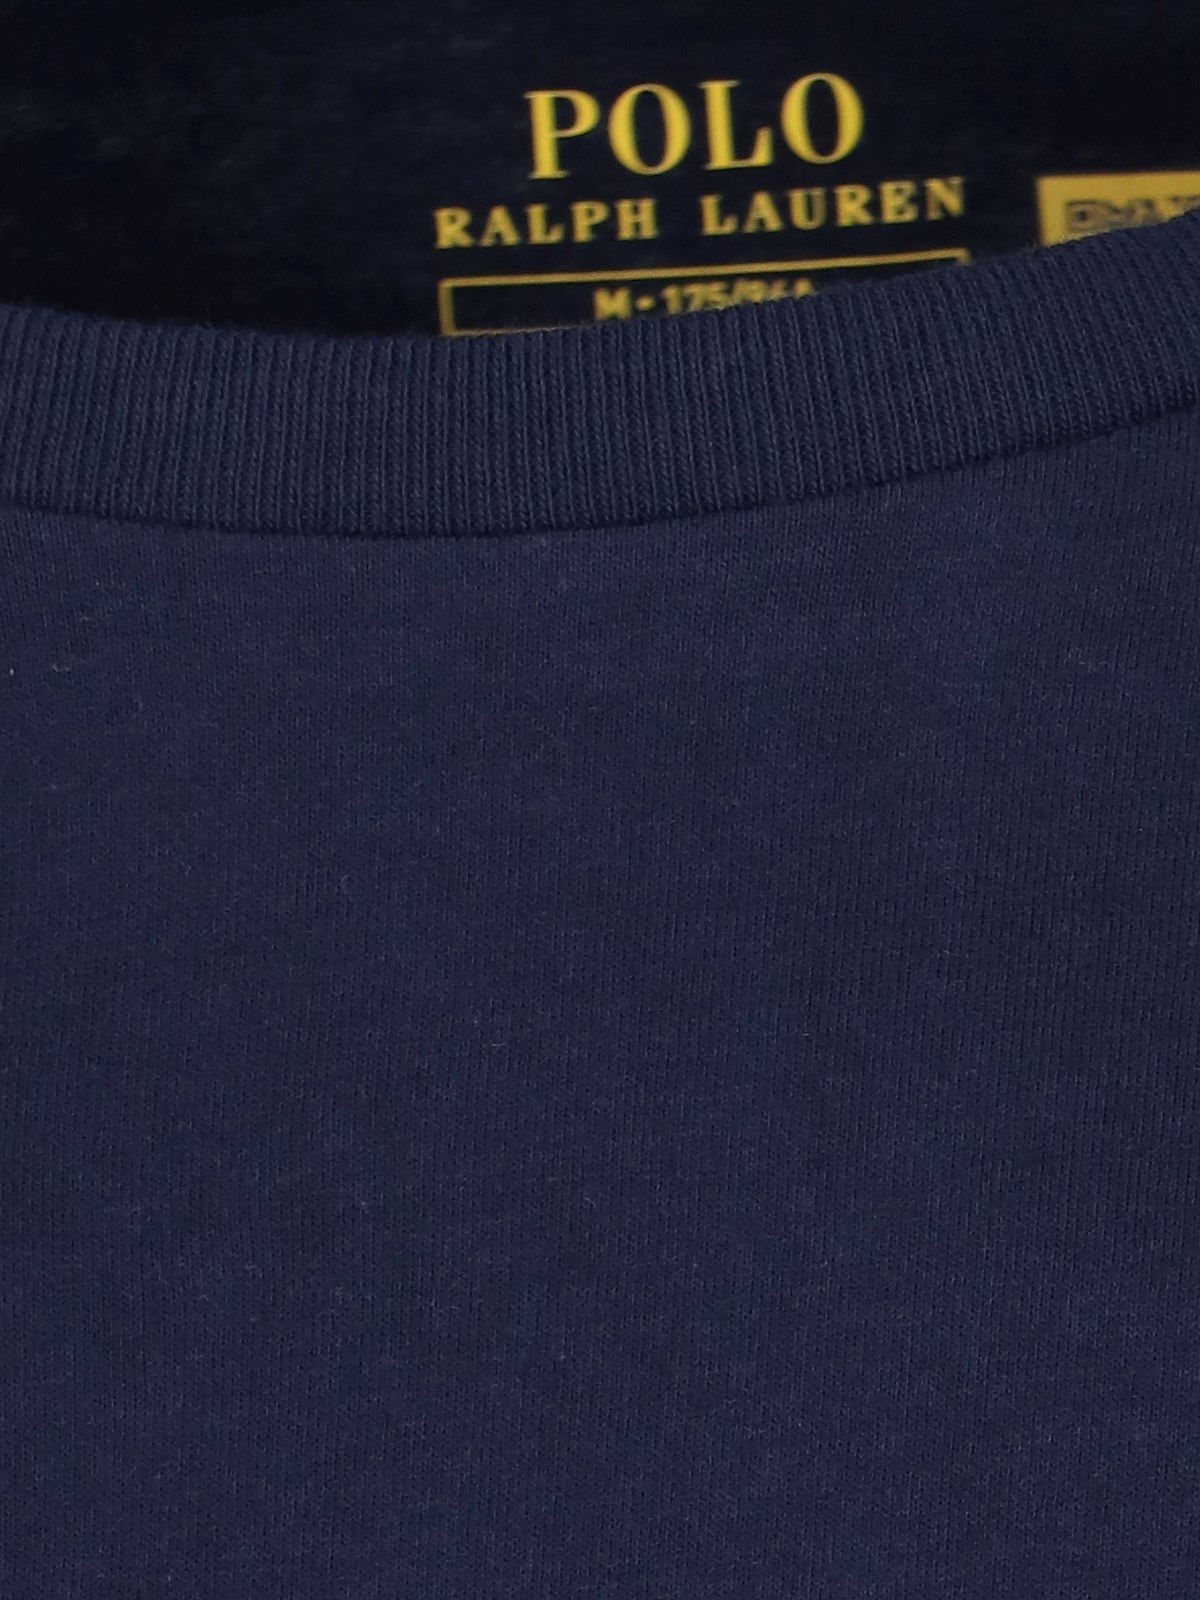 Polo ralph lauren Classic logo t-shirt available on SUGAR - 123587